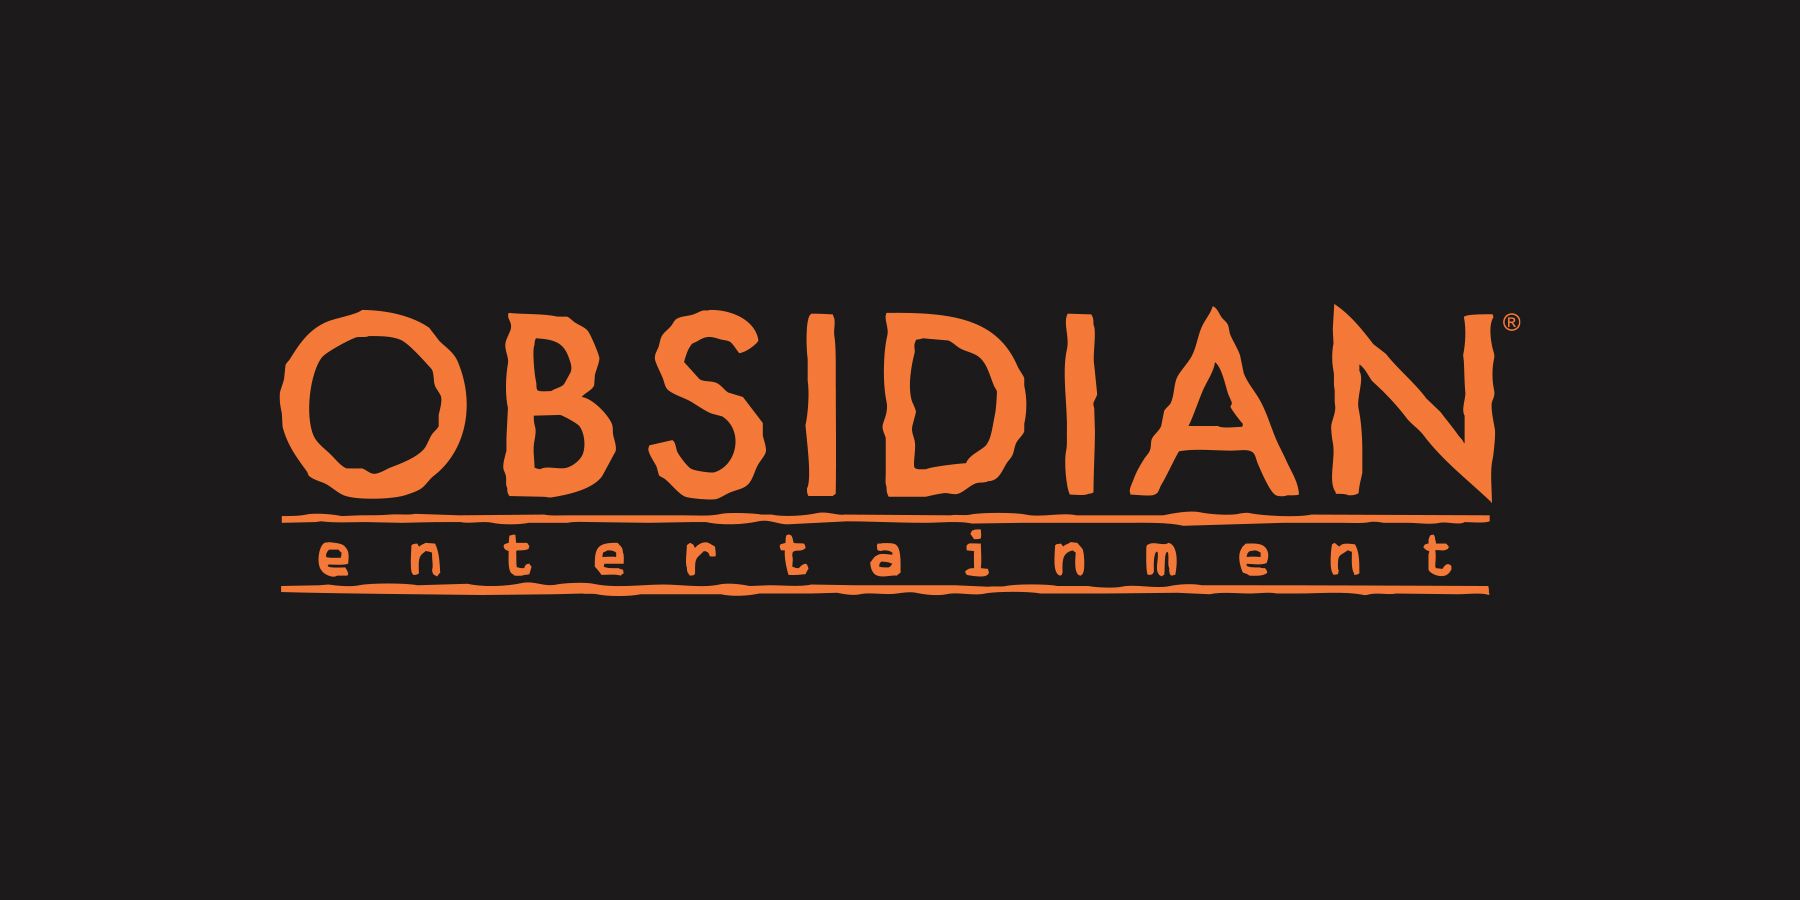 Obsidian Entertainment Crayola Orange on Eerie Black logo